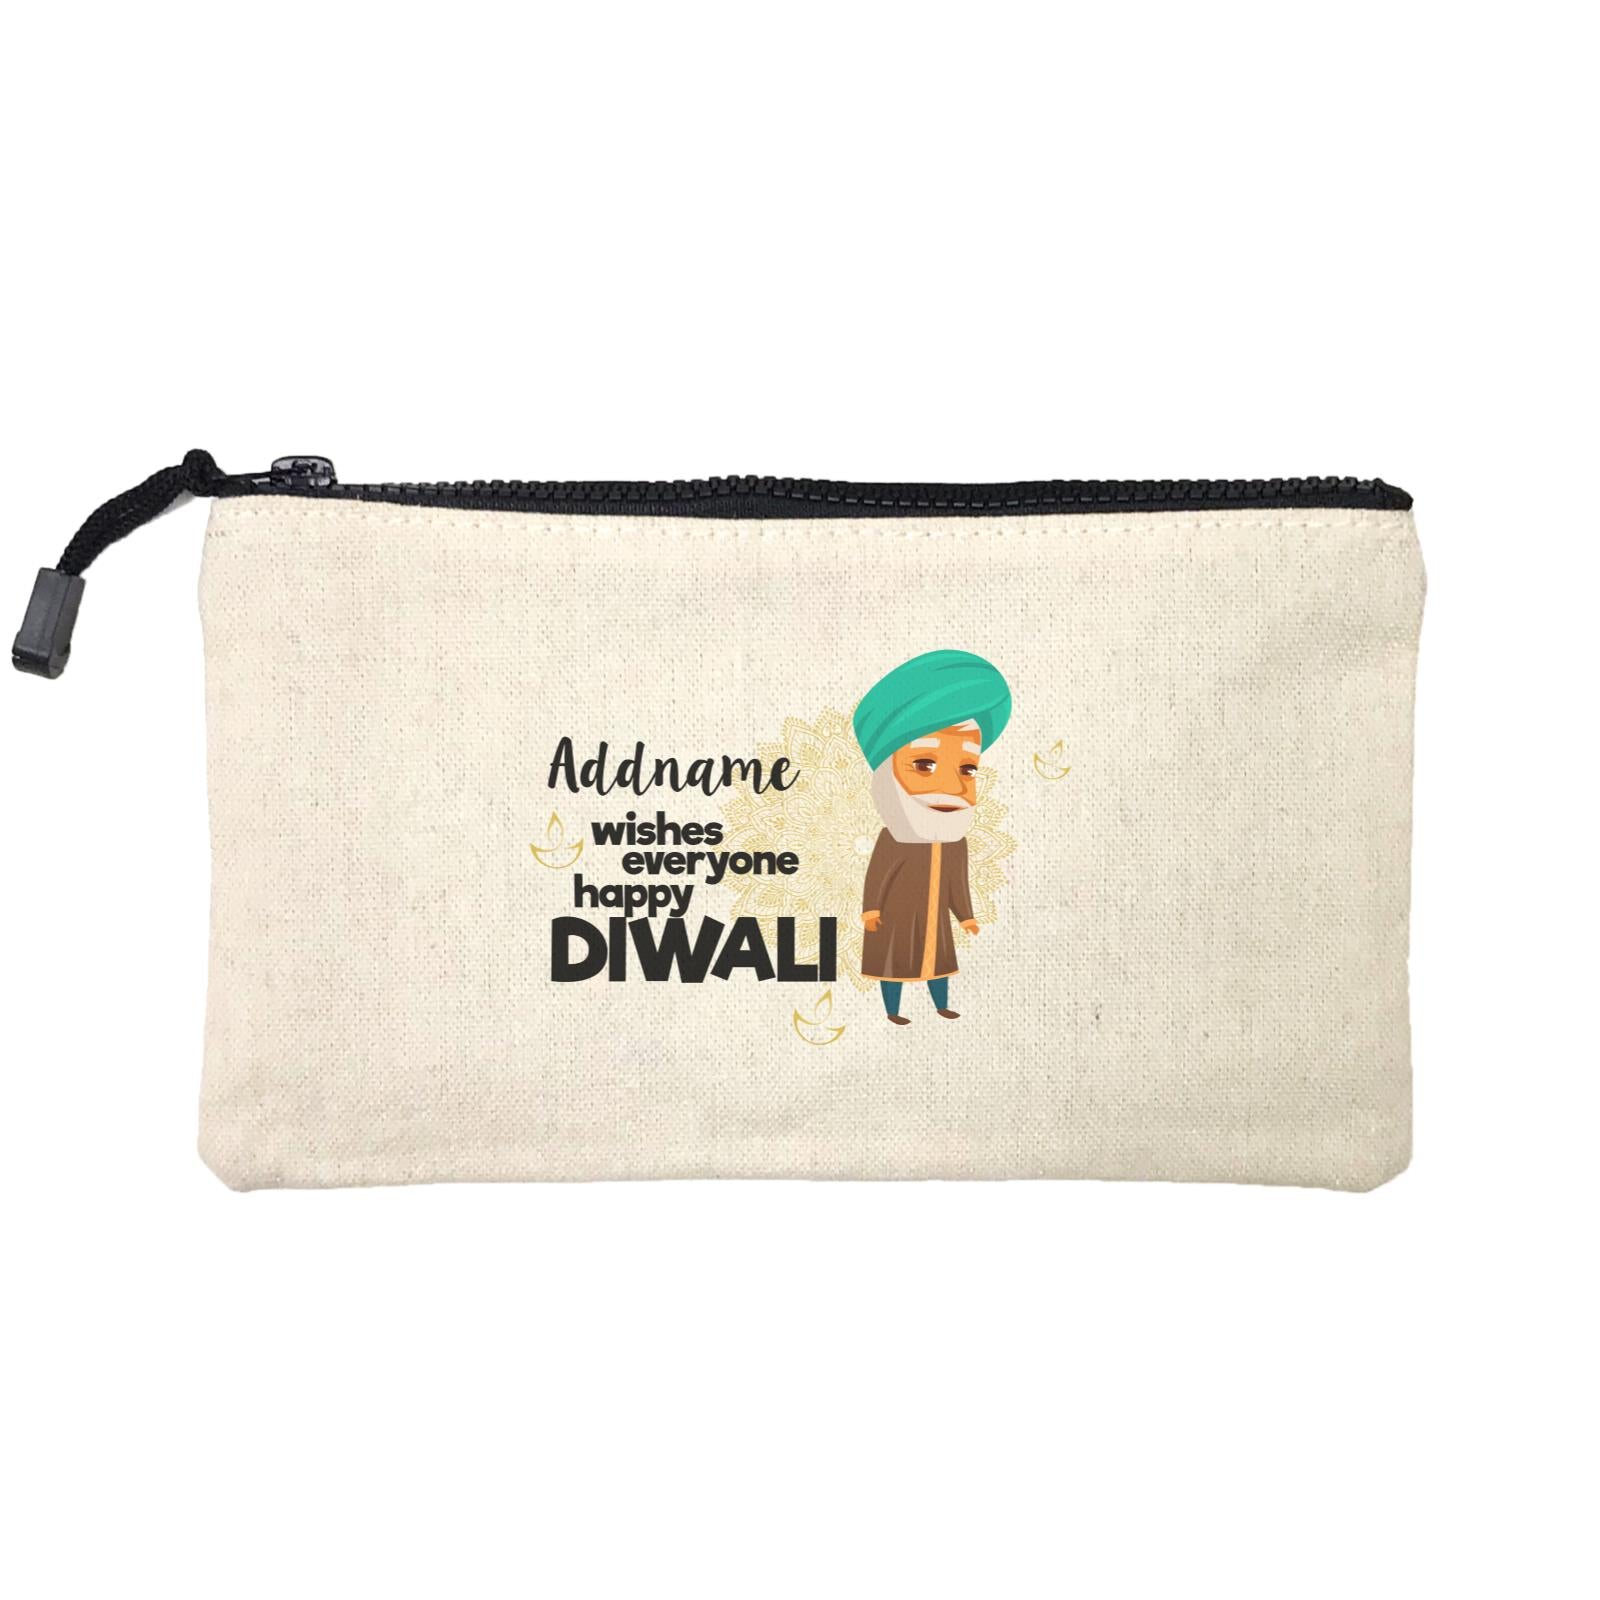 Cute Grandpa Wishes Everyone Happy Diwali Addname Mini Accessories Stationery Pouch